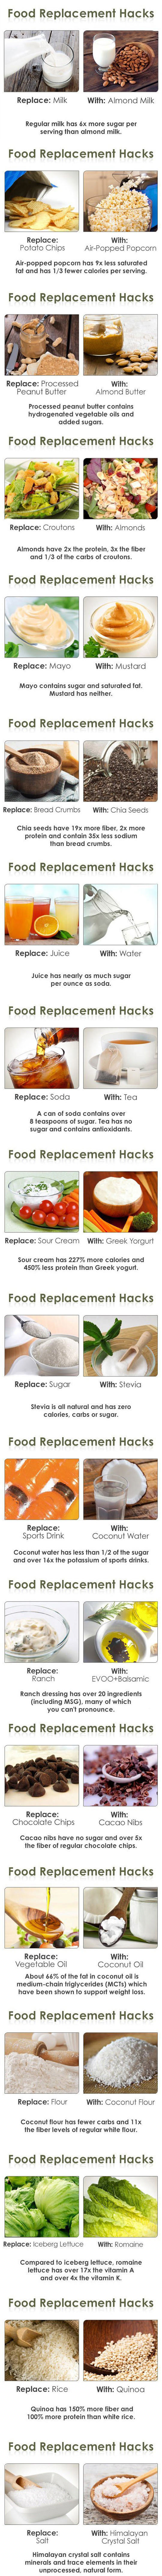 18 Useful Food Replacement Hacks